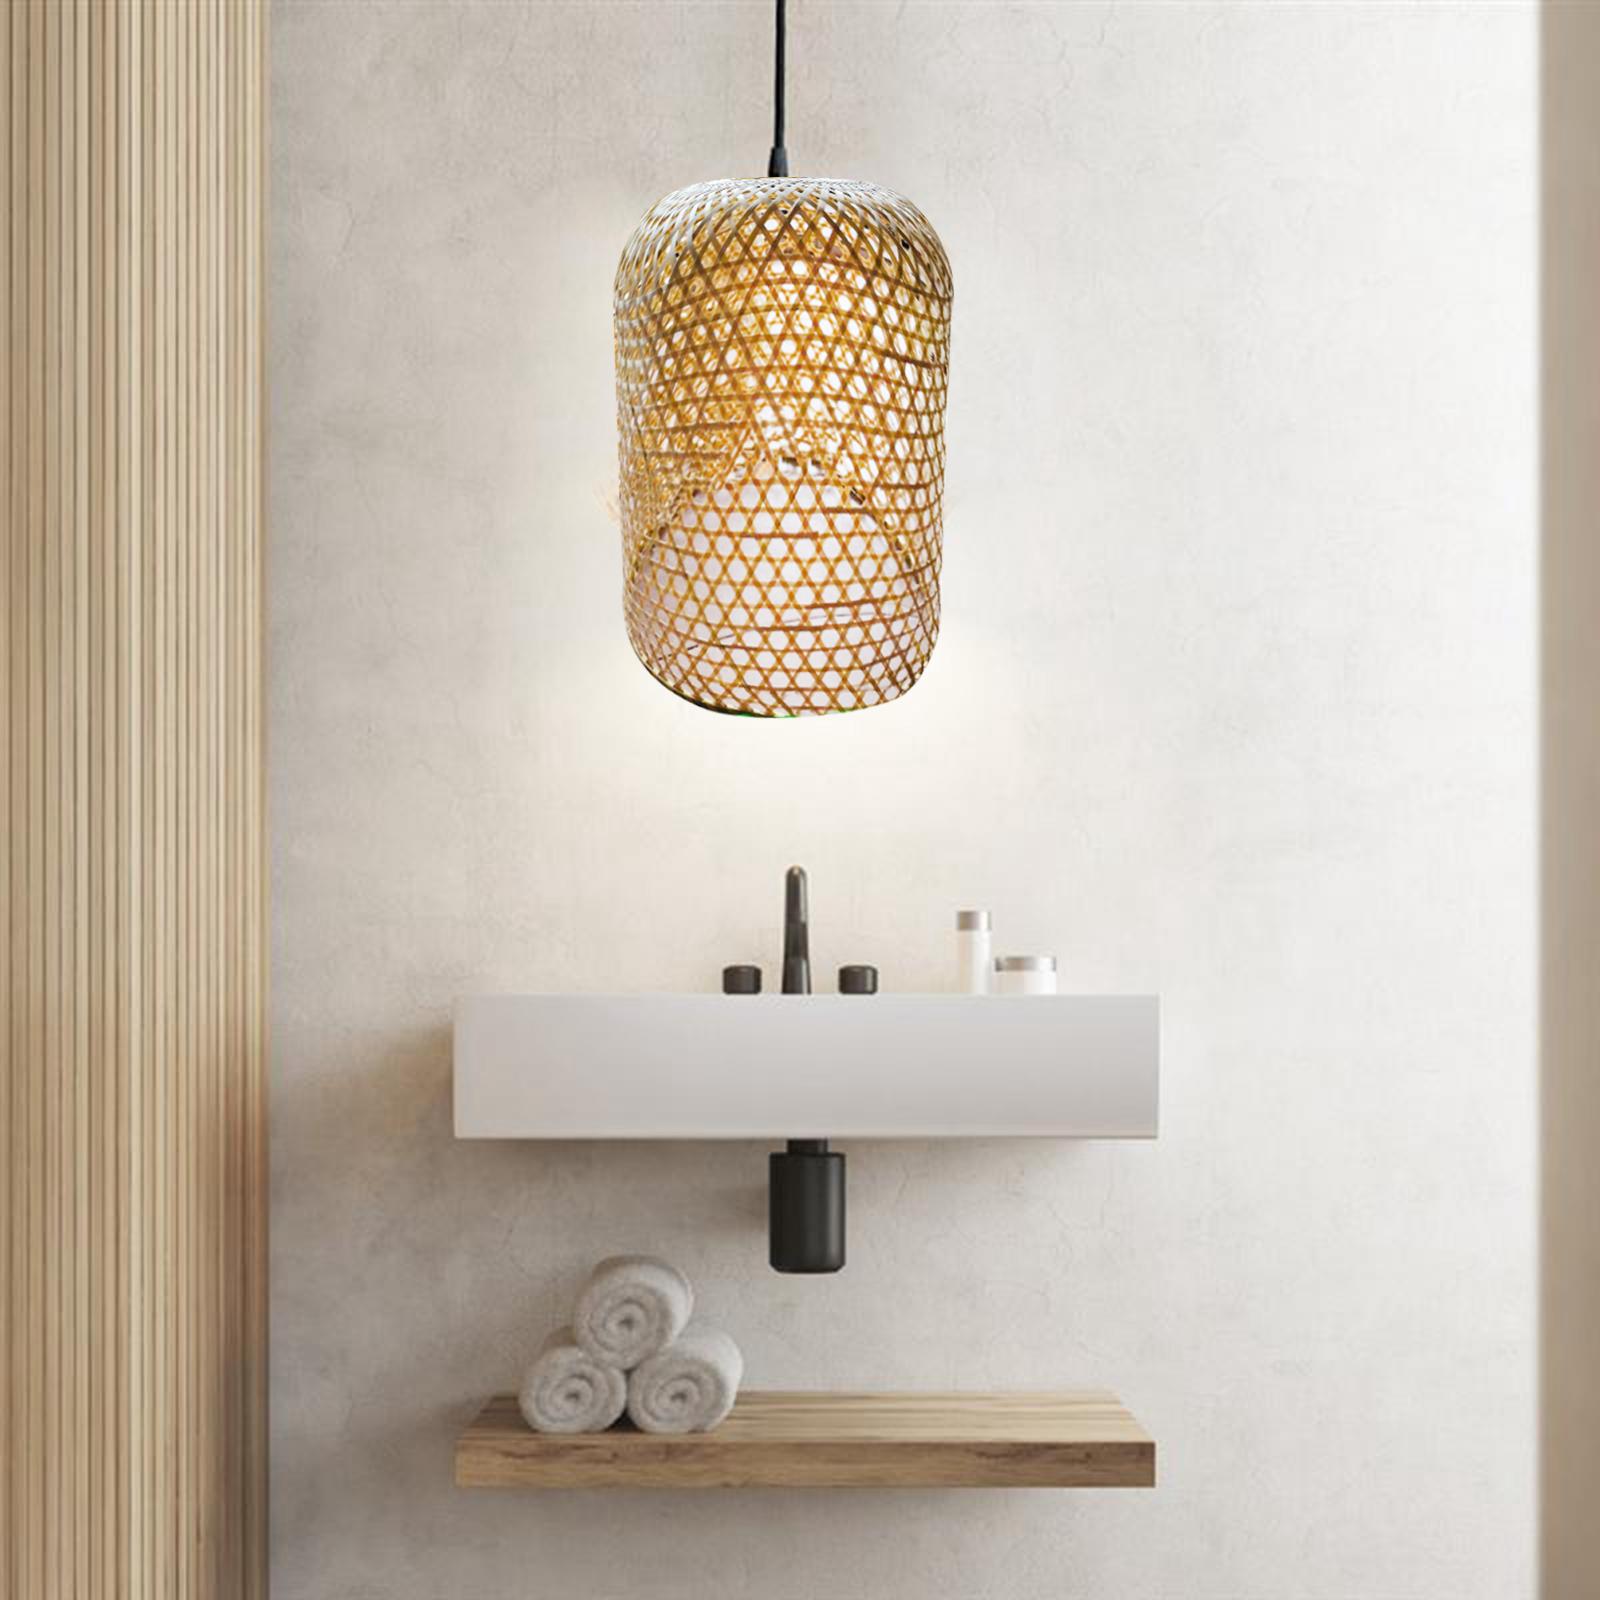 Weaving Bamboo Lamp Shade Lantern Art Crafts for Kitchen Tea Decor 20cmx30cm